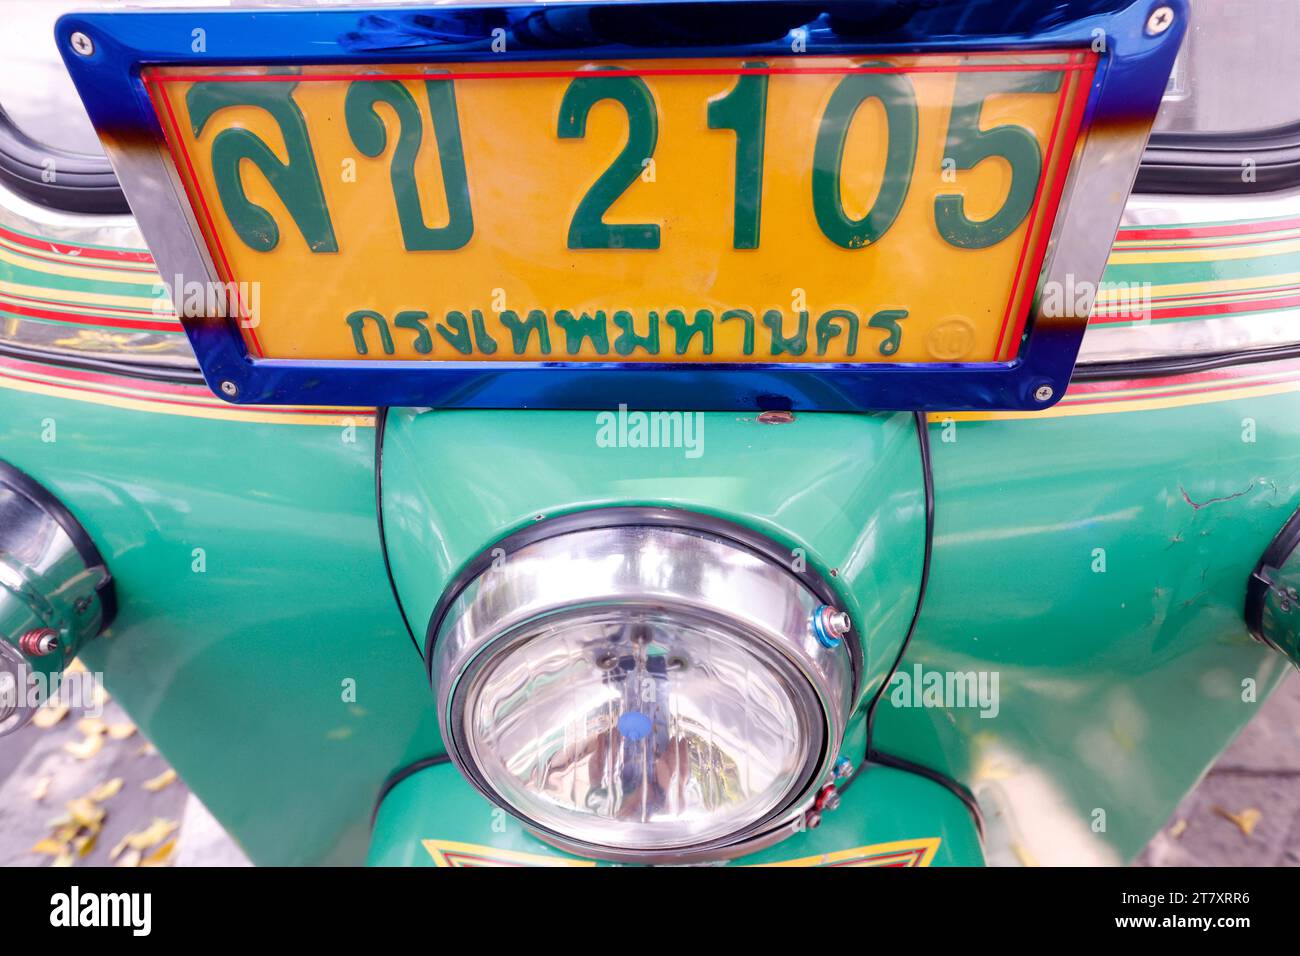 Close up of registration plate of a Tuk Tuk, a taxi characteristic of South East Asia, Bangkok, Thailand, Southeast Asia, Asia Stock Photo